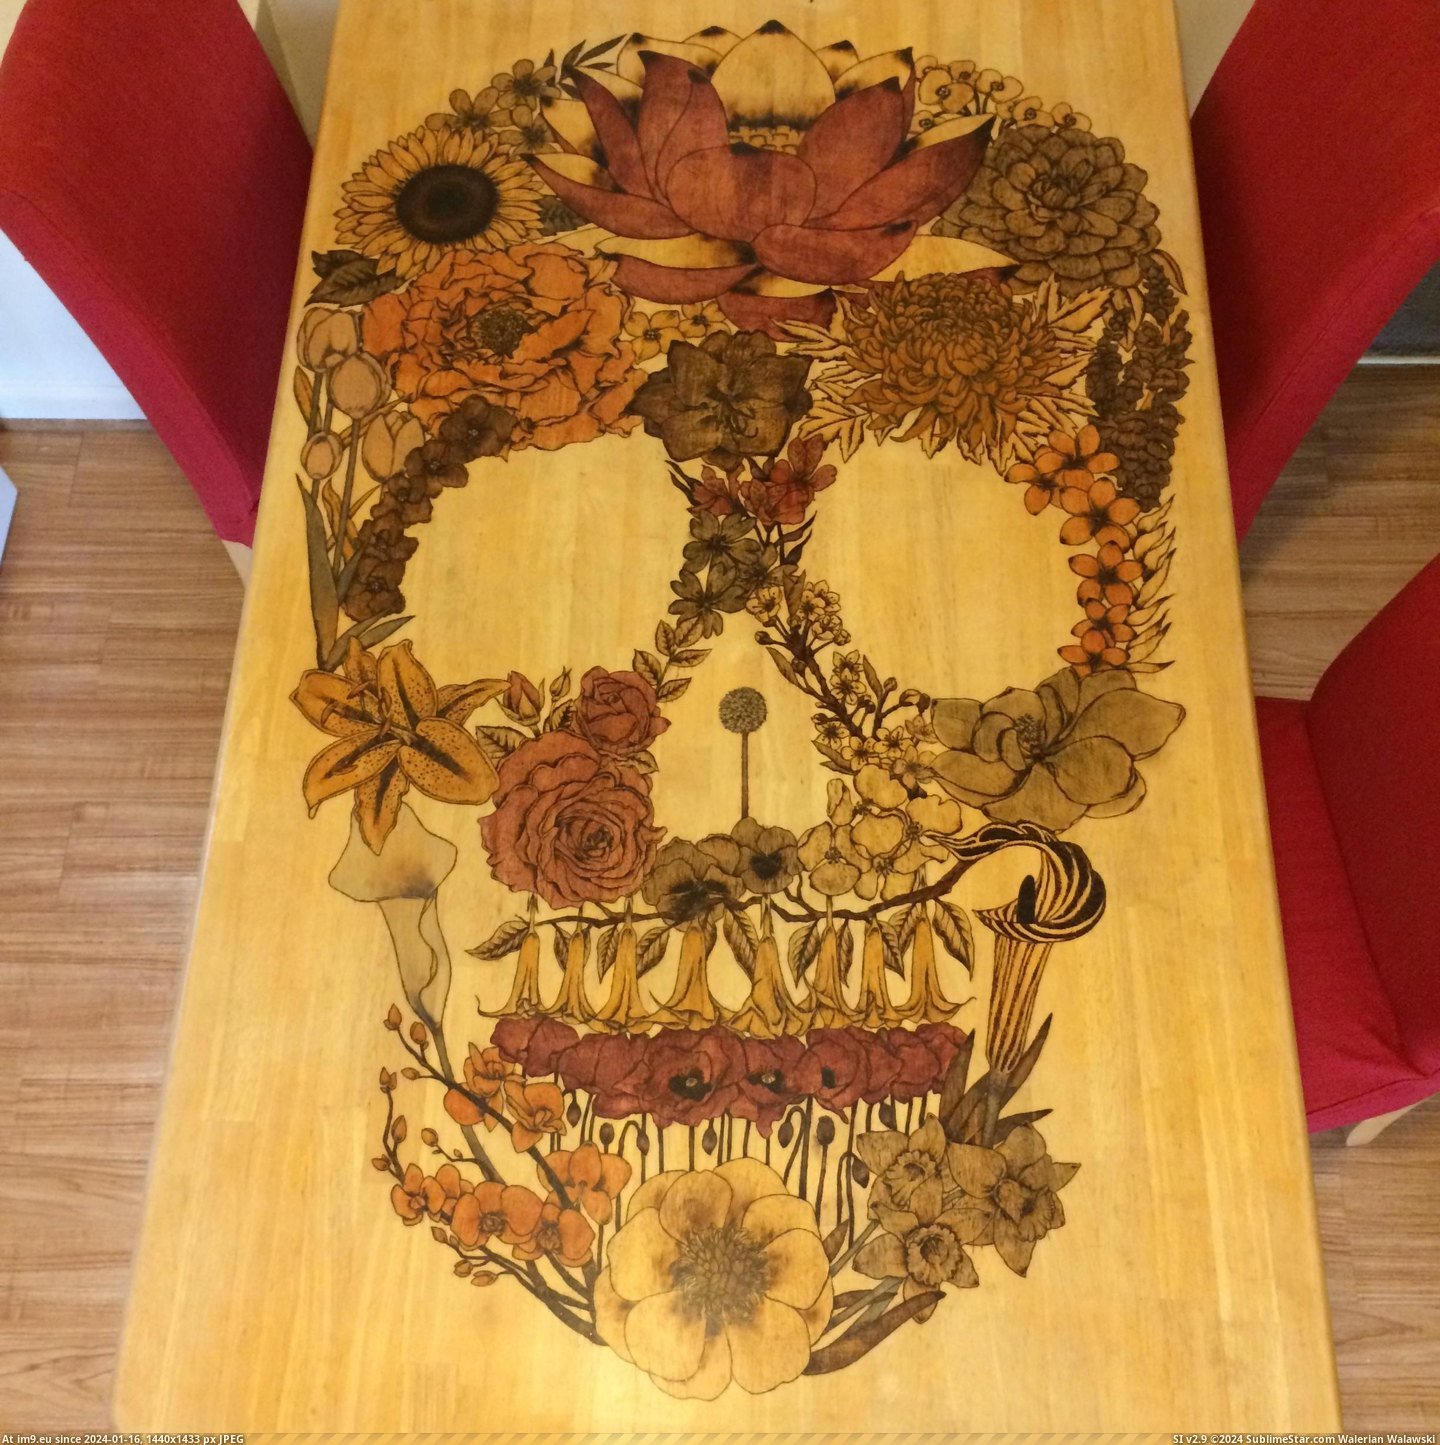 #Kitchen #Skull #Woodburning #Flower [Pics] Flower Skull Woodburning On Kitchen Table Pic. (Изображение из альбом My r/PICS favs))